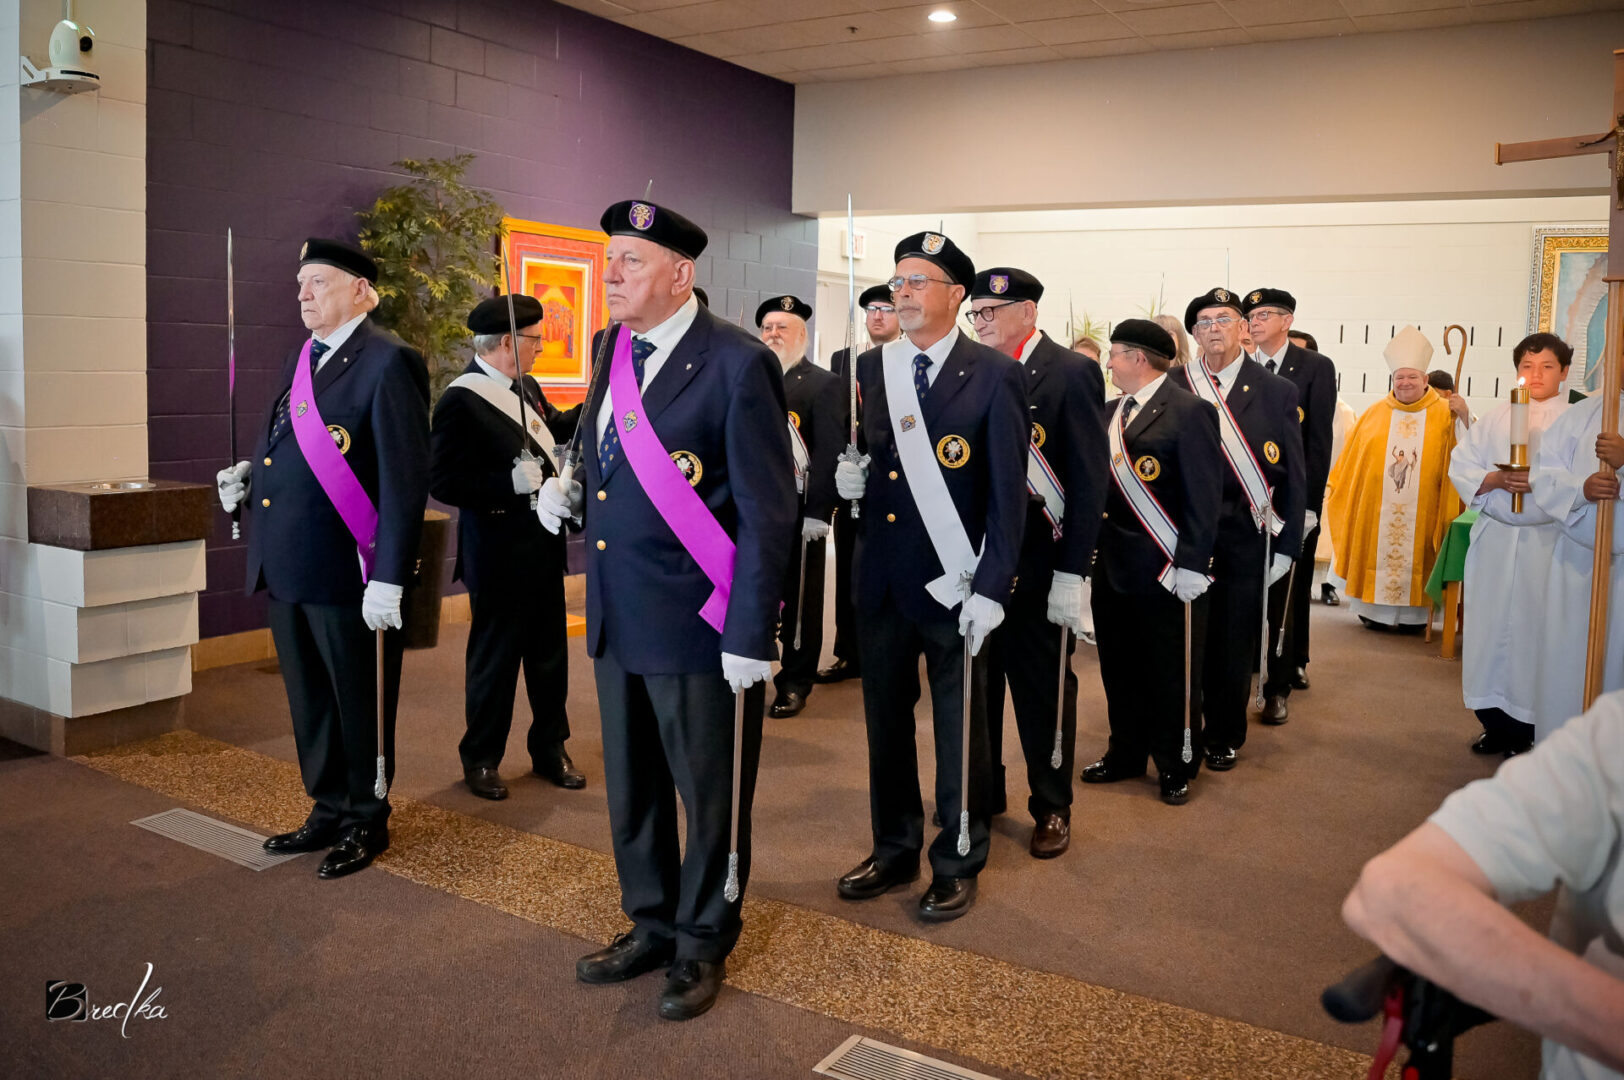 Men in uniform holding swords in procession.